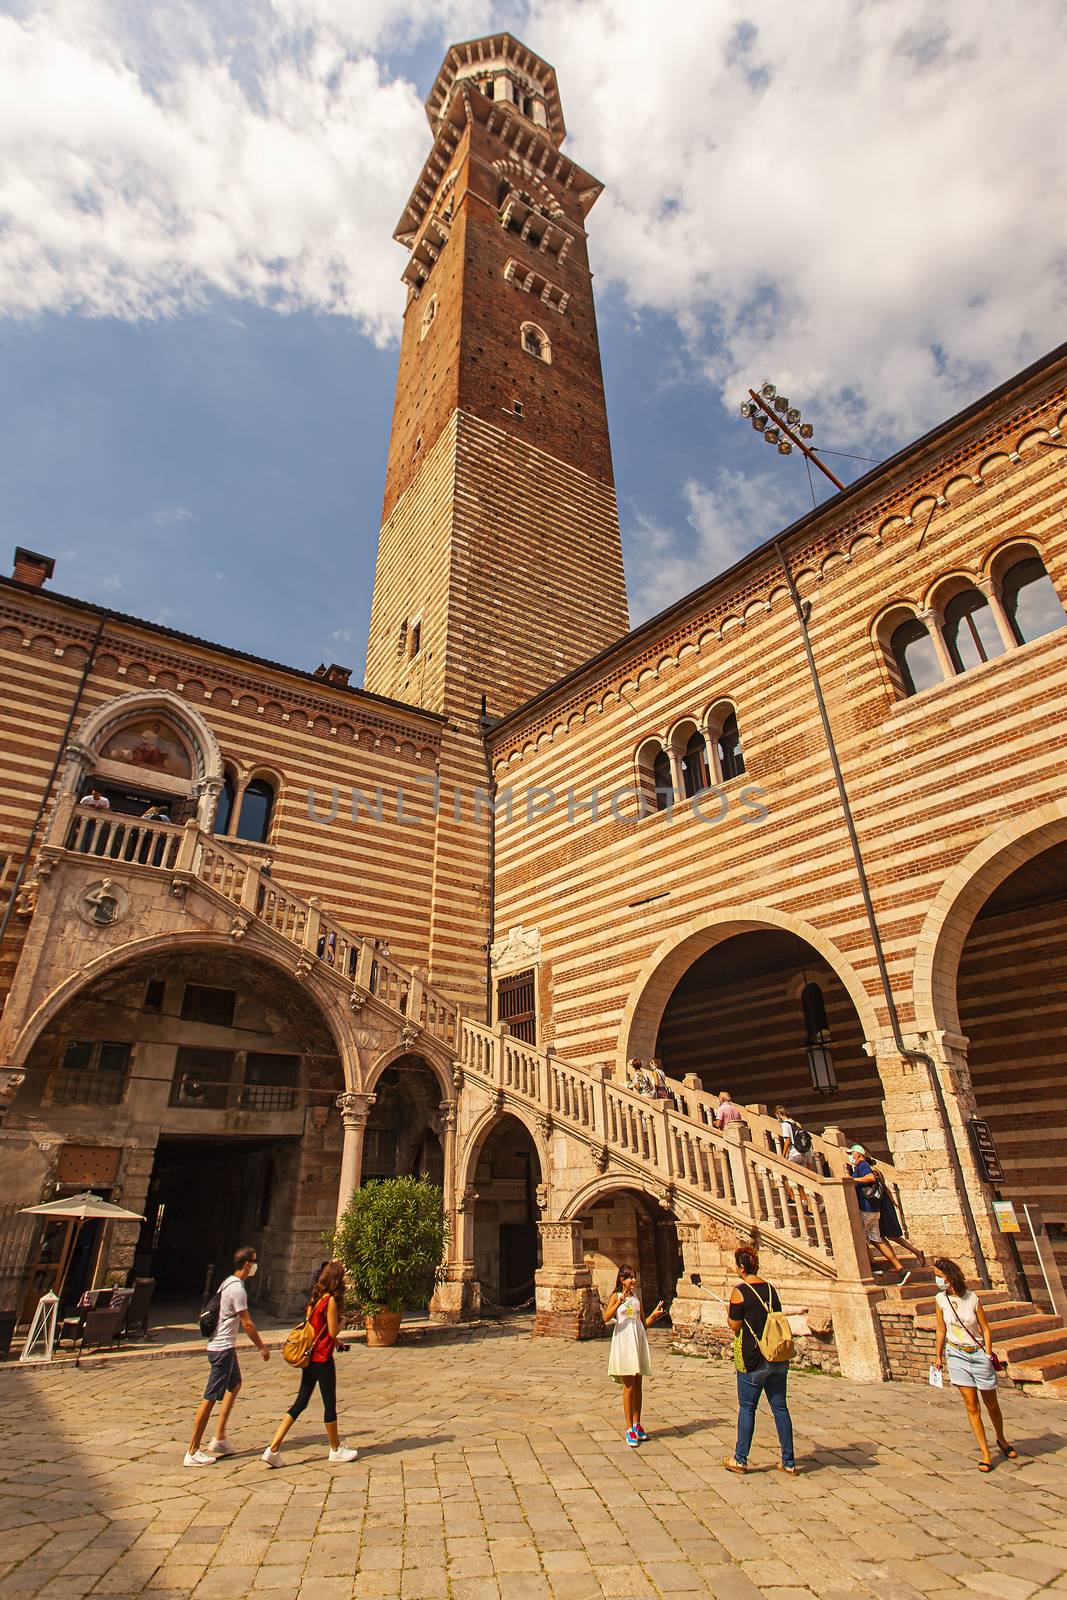 Palazzo della Regione with staircase in Verona in Italy 2 by pippocarlot